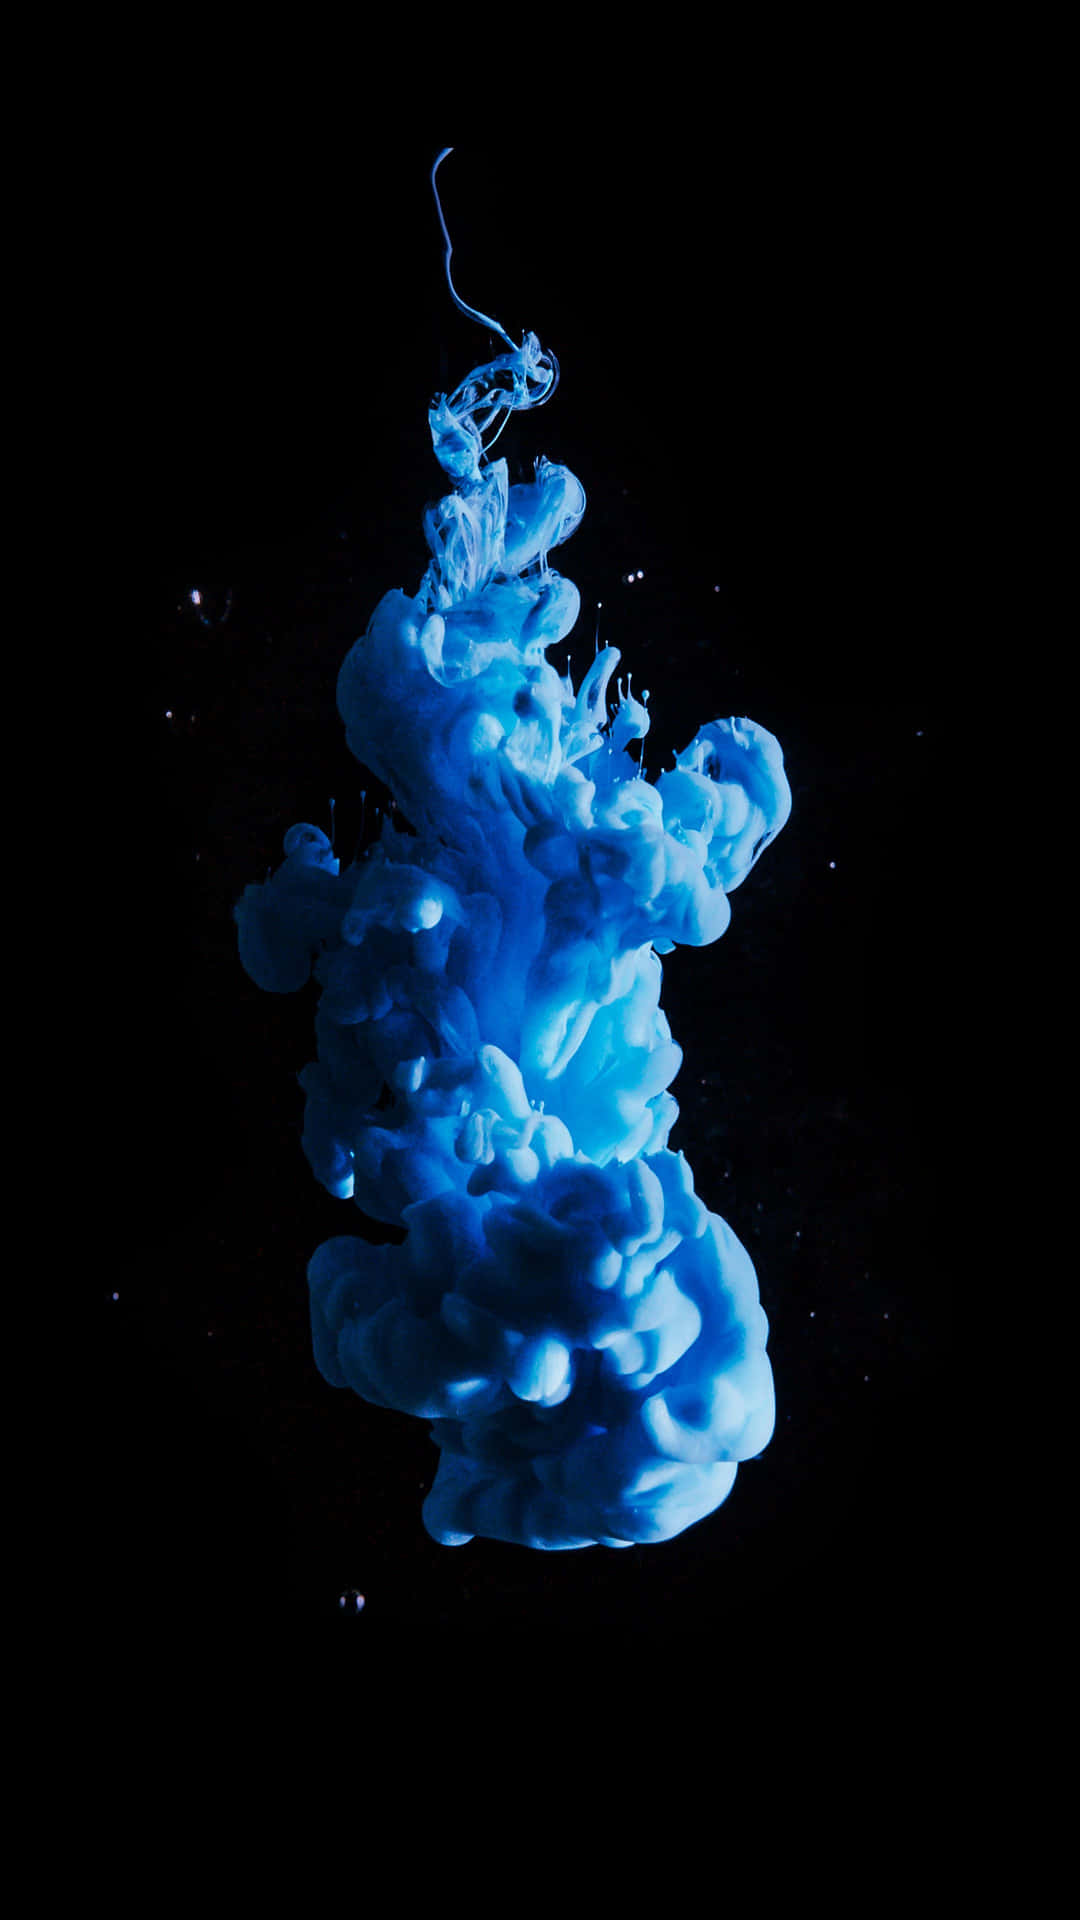 Mesmerizing Blue Amoled Abstract Image Wallpaper